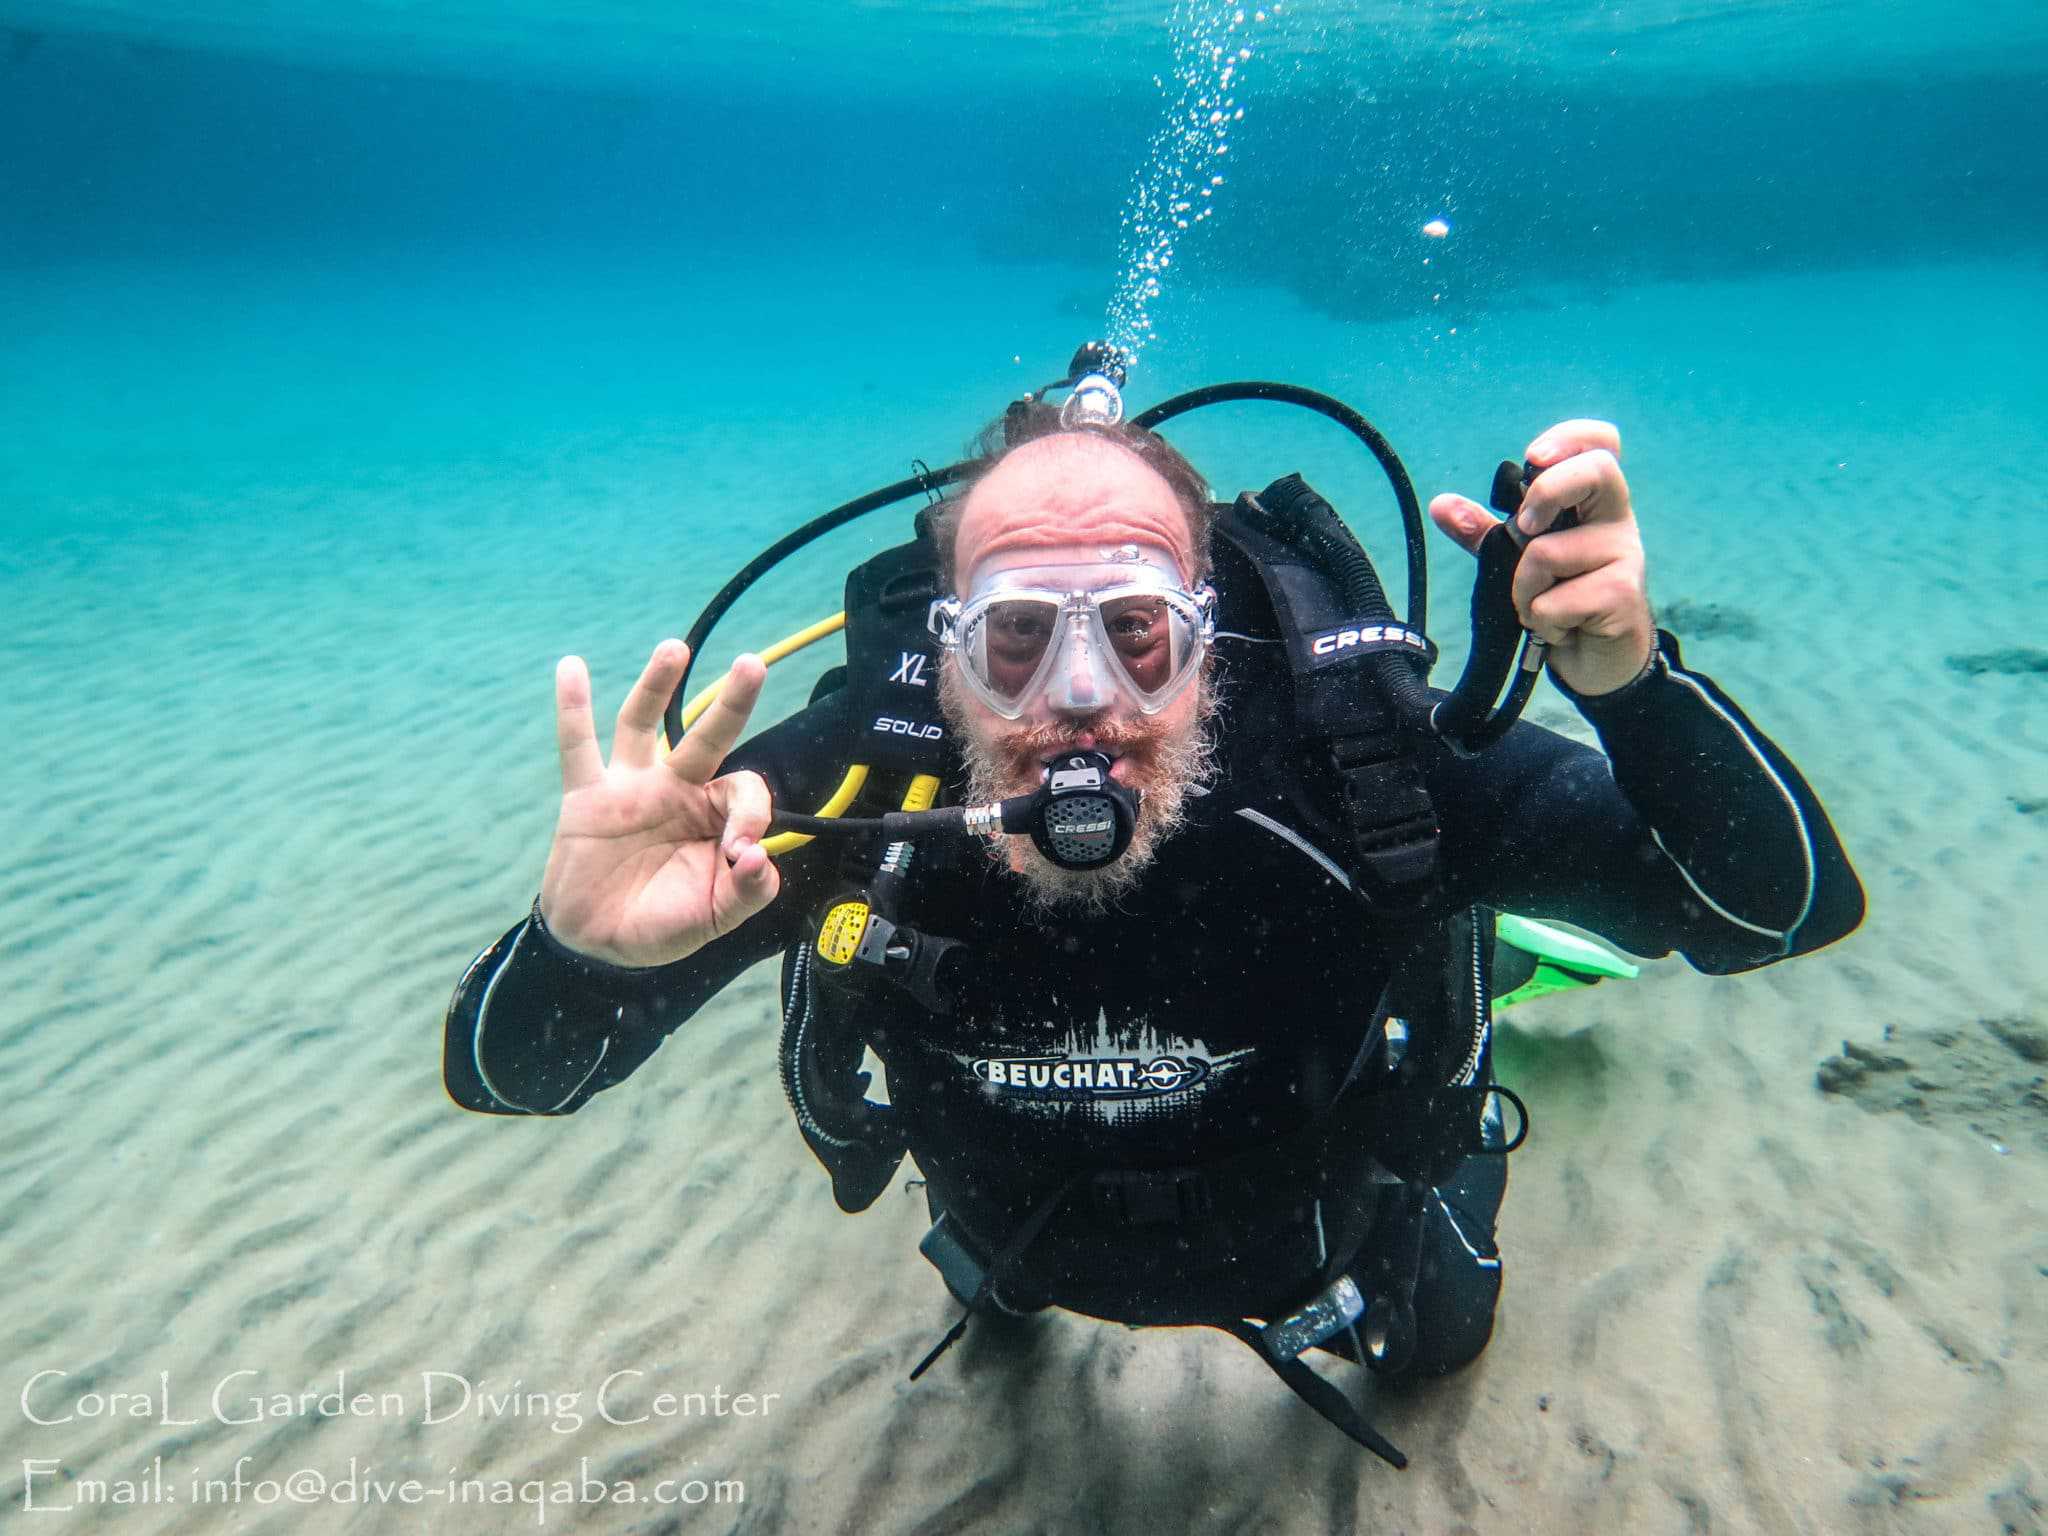 What to do in Aqaba? - Coral Garden Diving Center